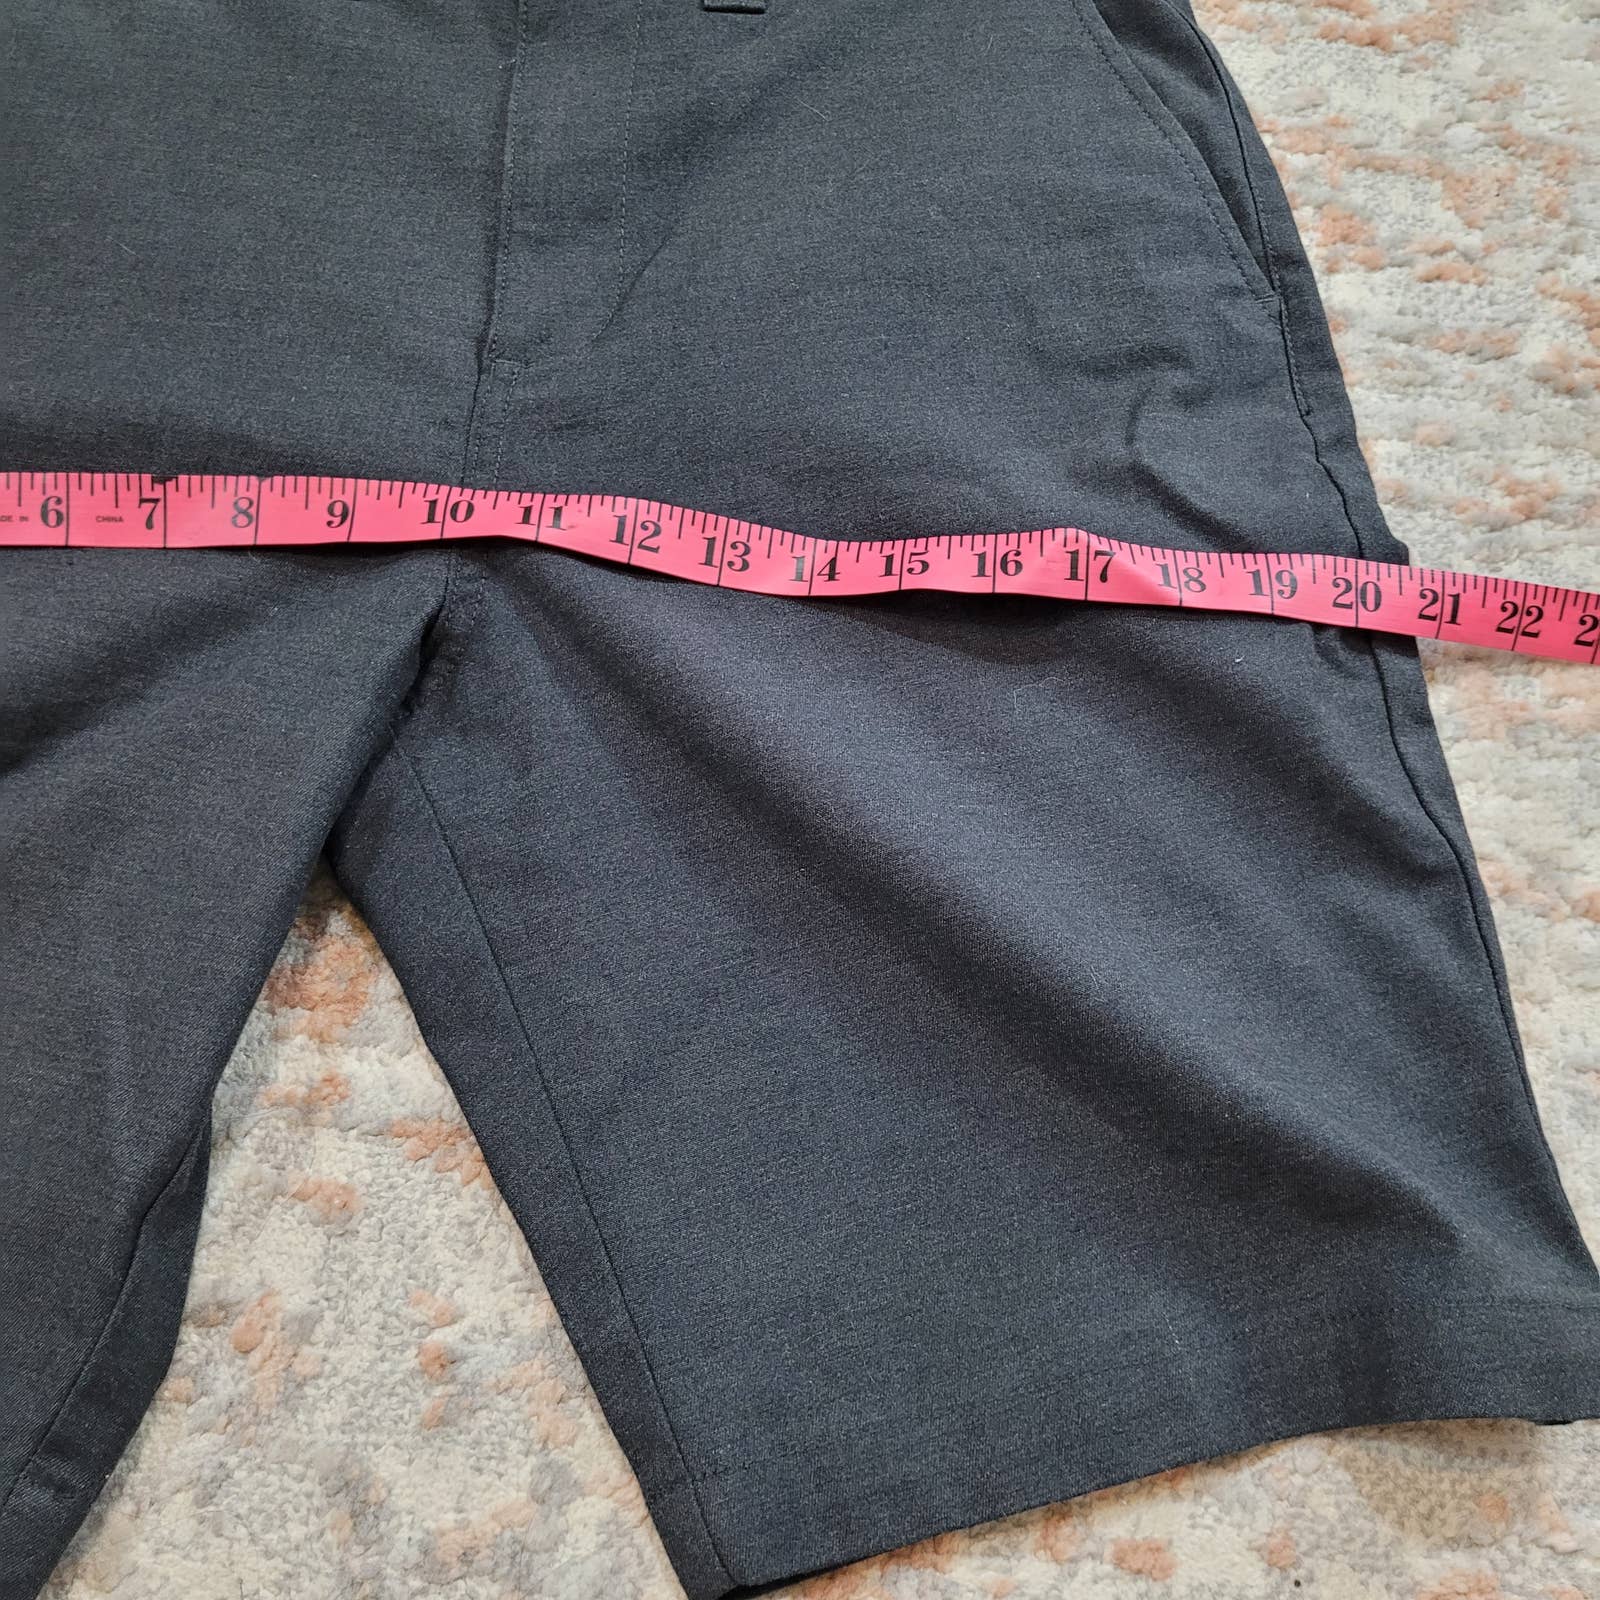 Billabong Carter Stretch Shorts - Size 31Markita's ClosetBillbong